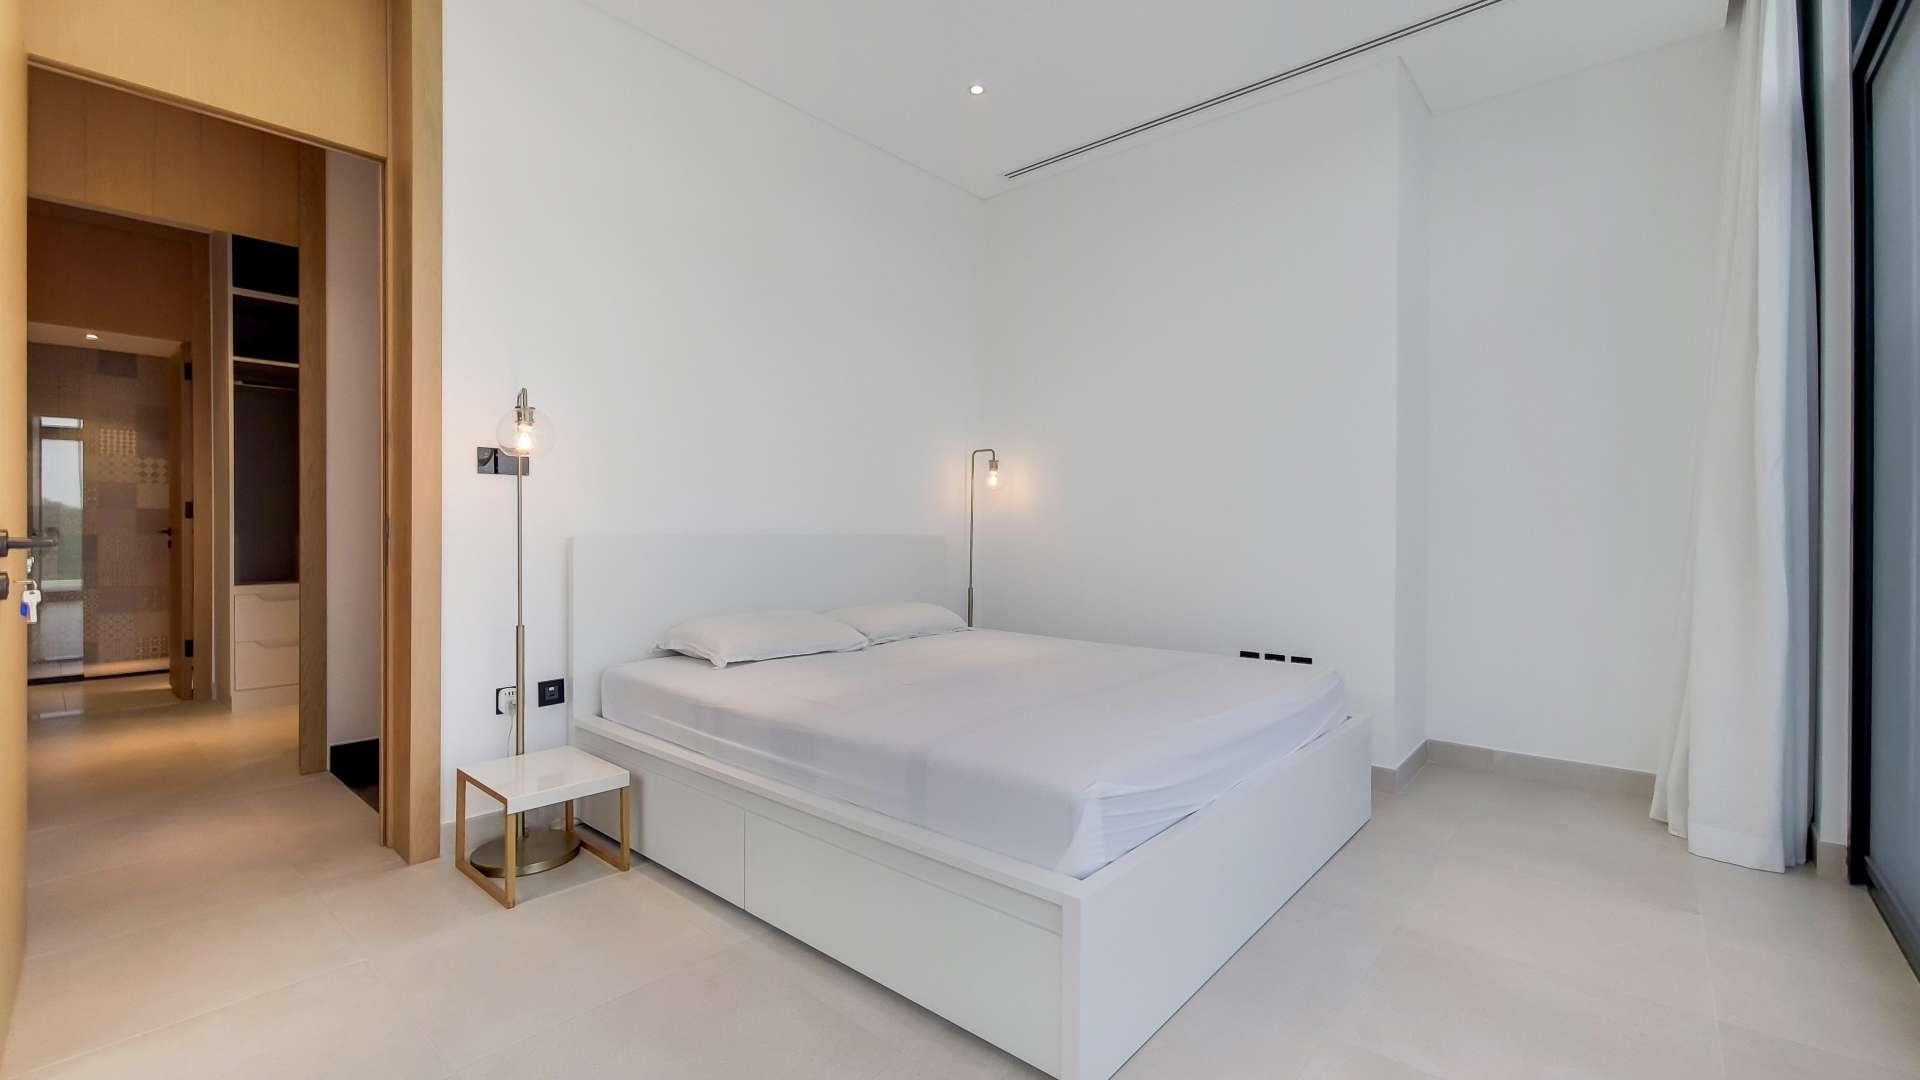 4 Bedroom Villa For Rent Jumeirah Luxury Lp18668 288d091c22f1f200.jpg